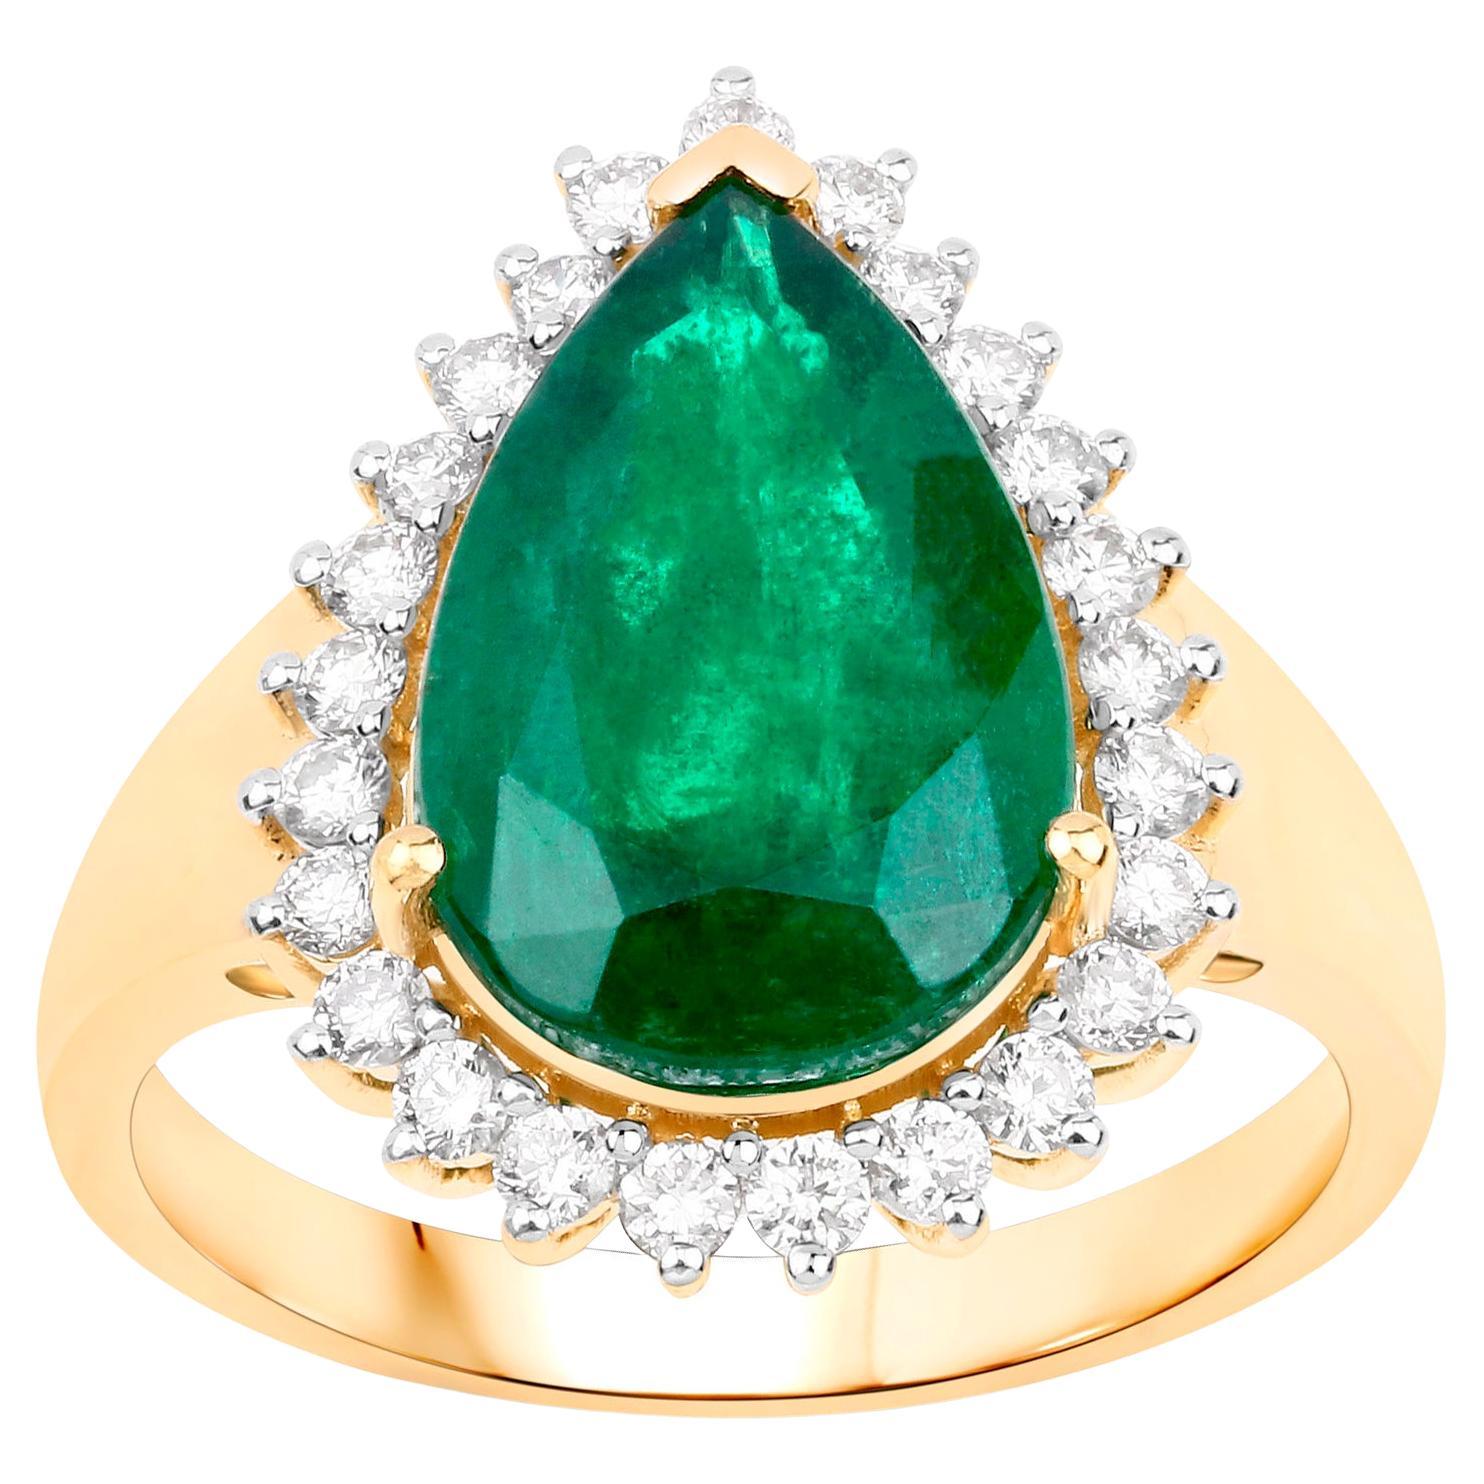 IGI Certified Zambian Emerald Ring With Diamonds 4.66 Carats 14K Yellow Gold